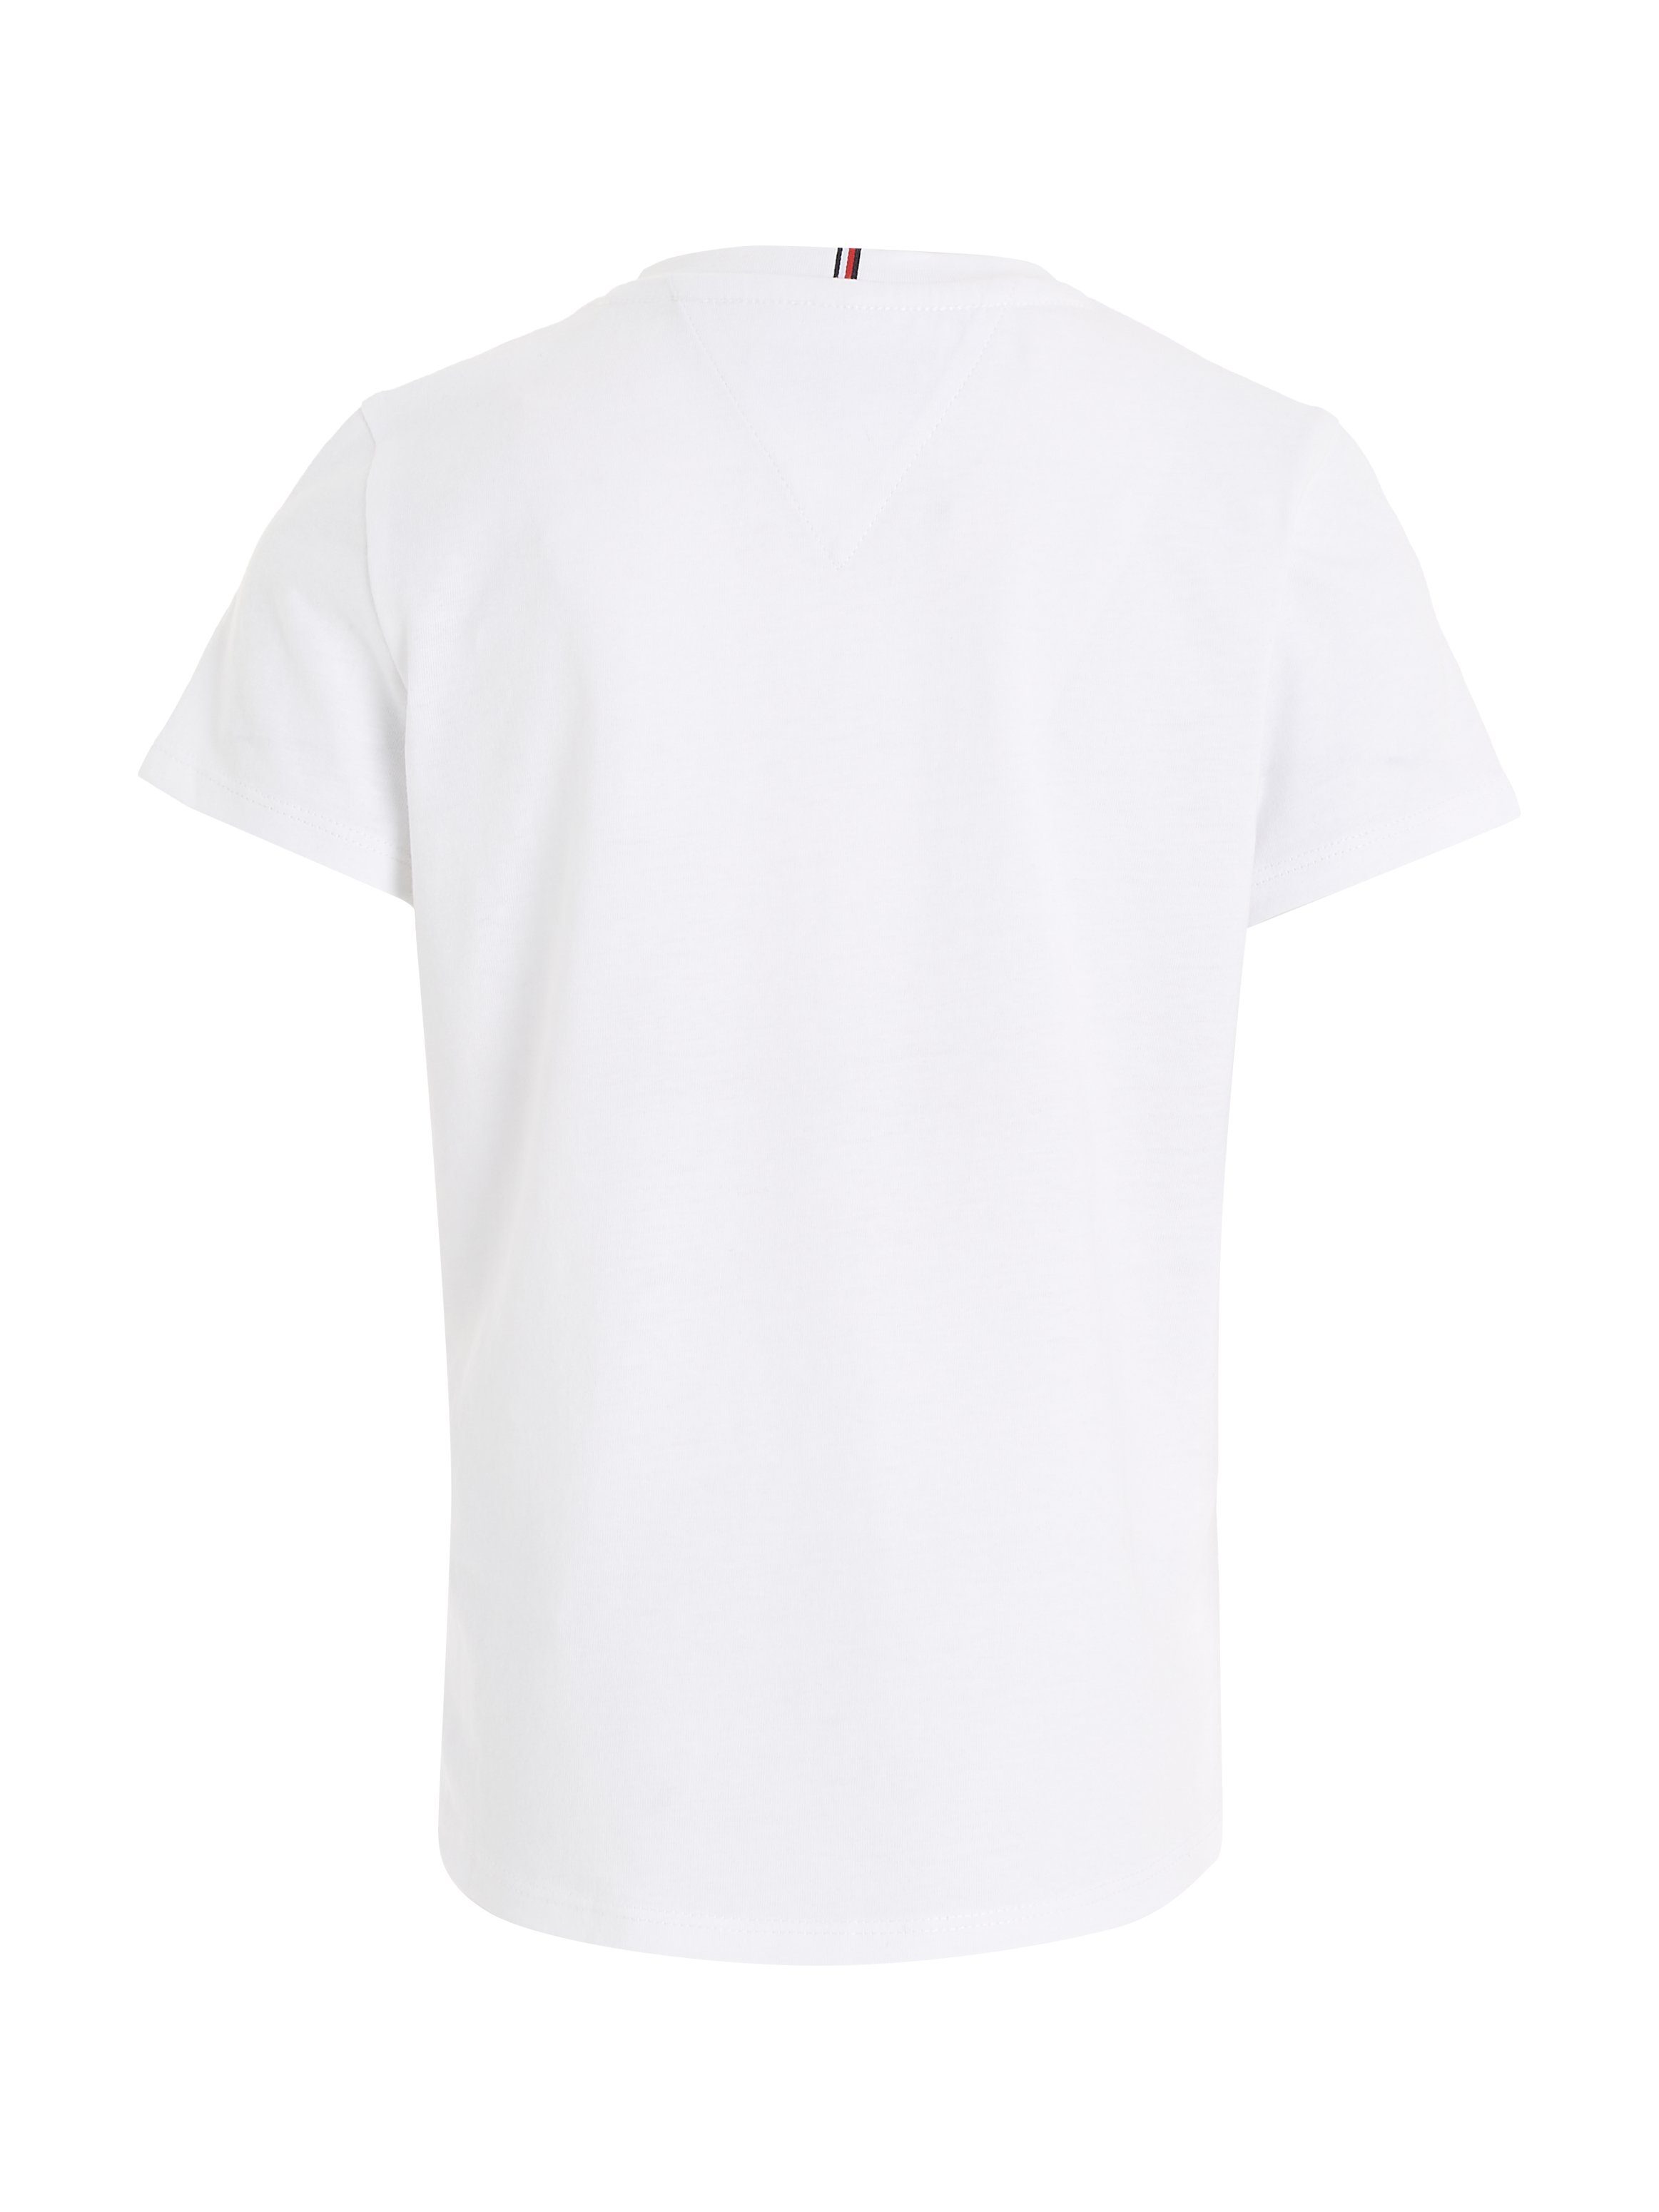 S/S Tommy TEE HILFIGER SCRIPT white Hilfiger T-Shirt